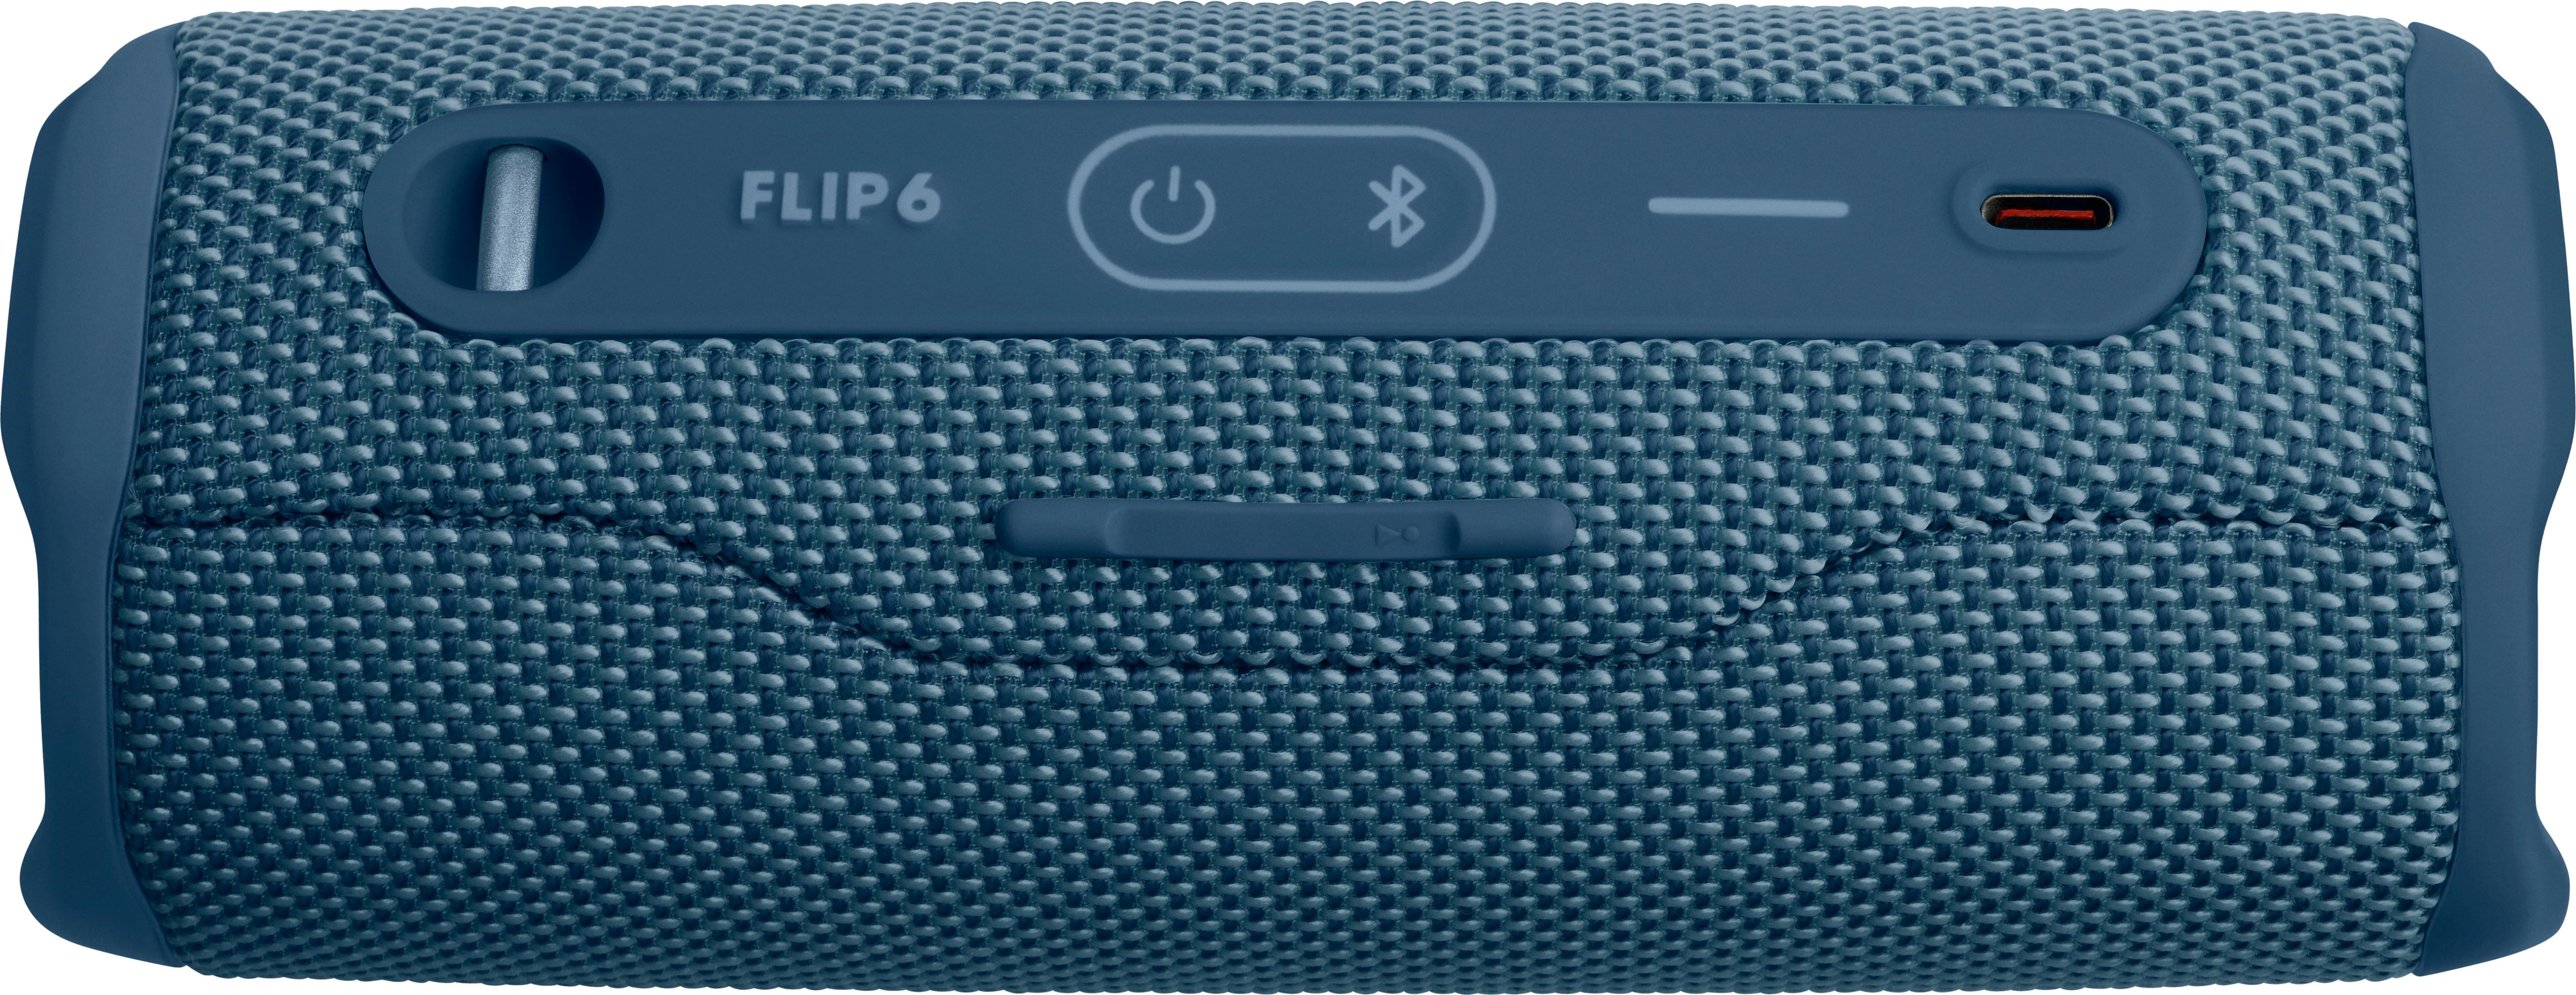 JBL FLIP6 Portable Speaker Blue Best Waterproof - Buy JBLFLIP6BLUAM